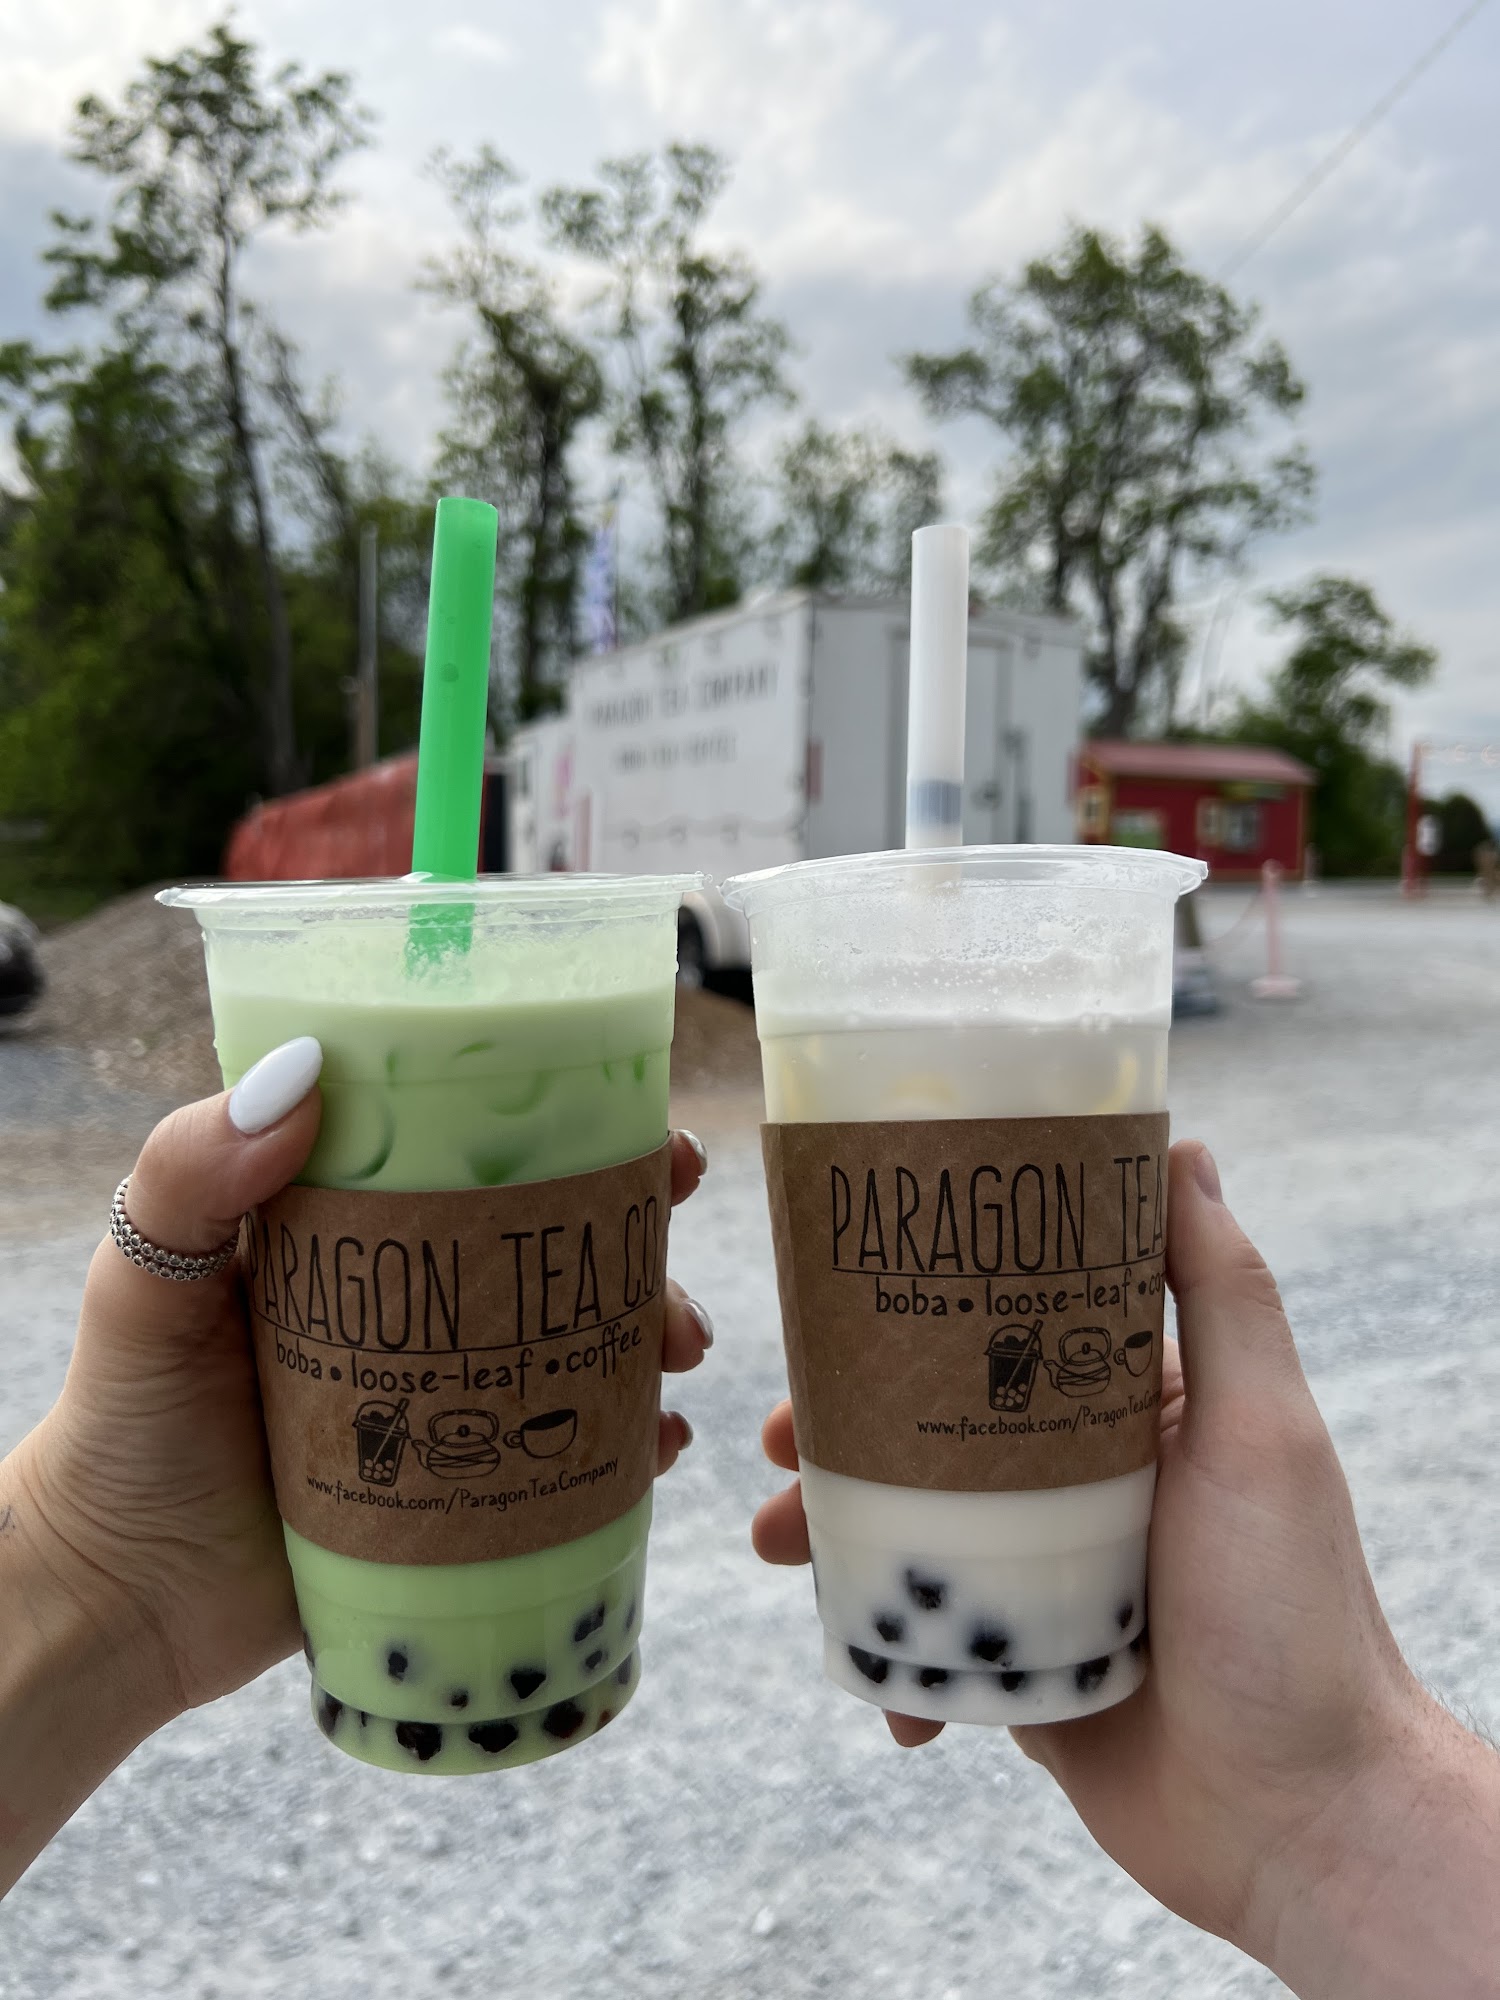 Paragon Tea Company